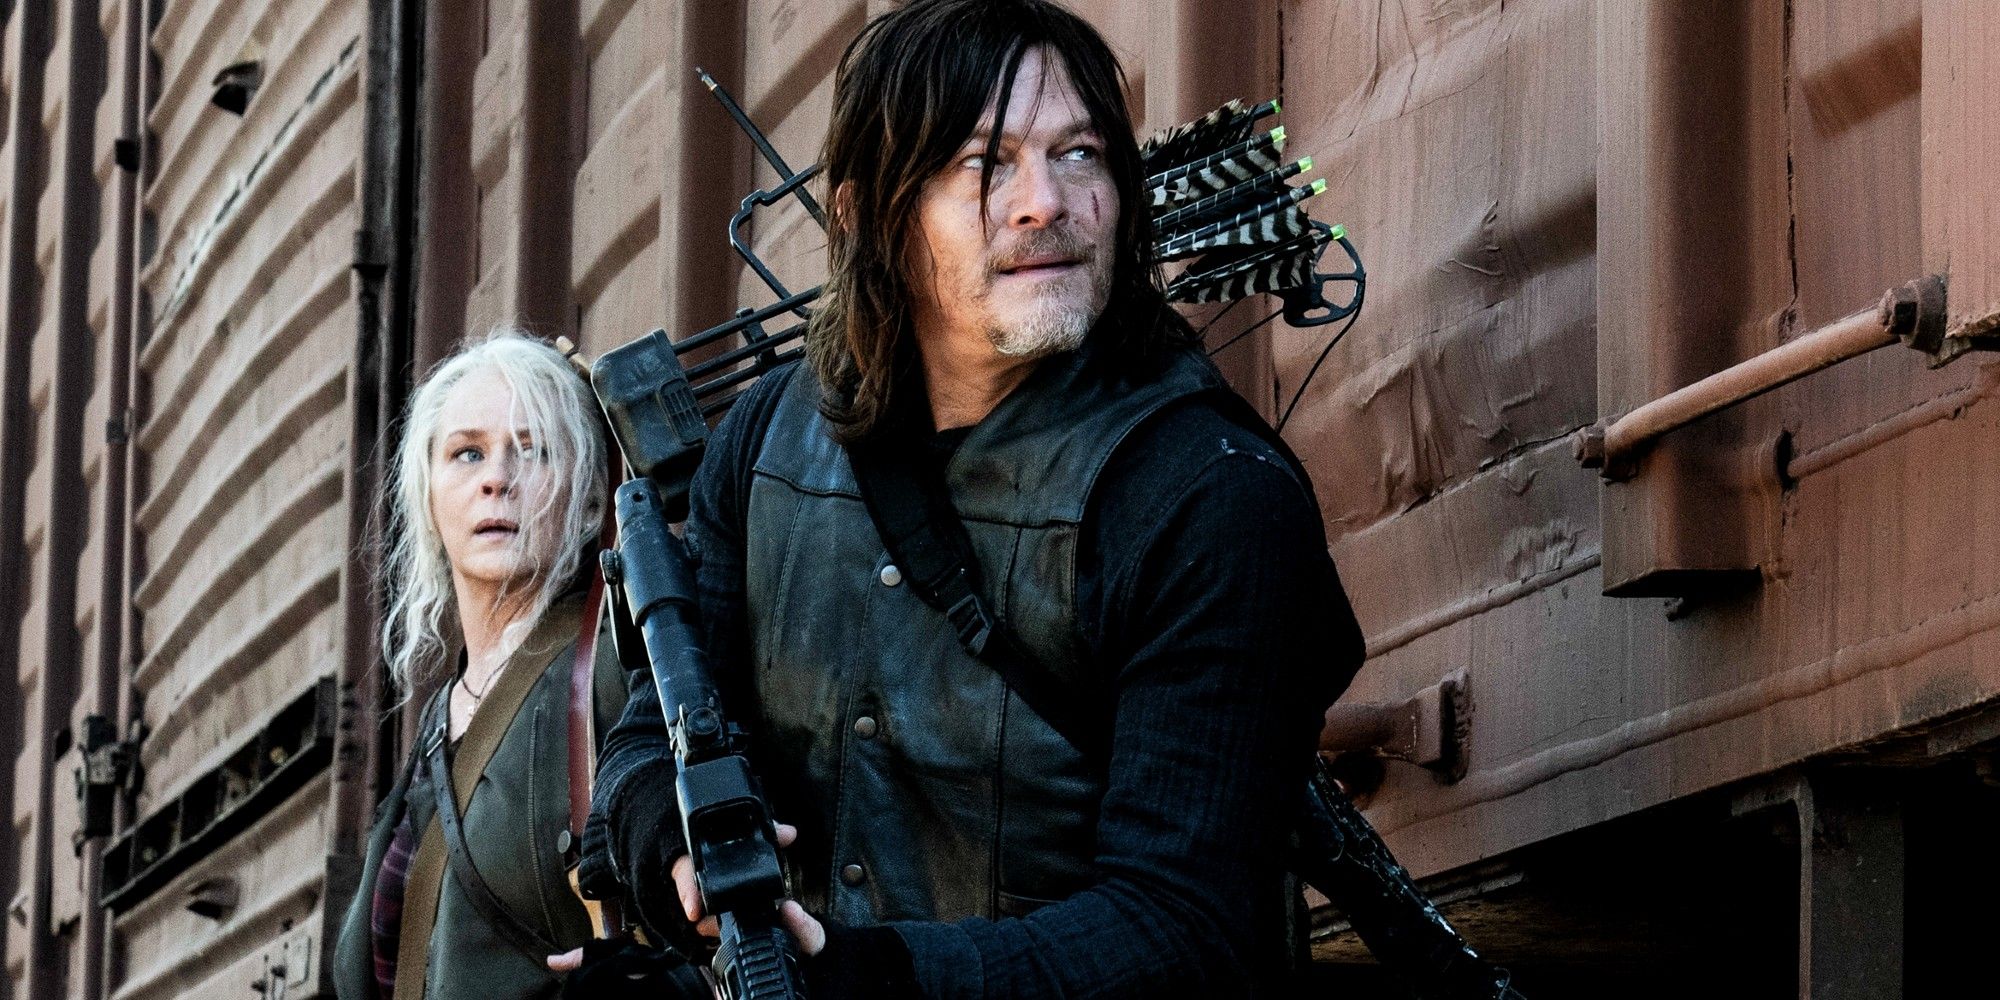 Melissa McBride as Carol and Norman Reedus as Daryl hiding behind a train car on The Walking Dead season 11